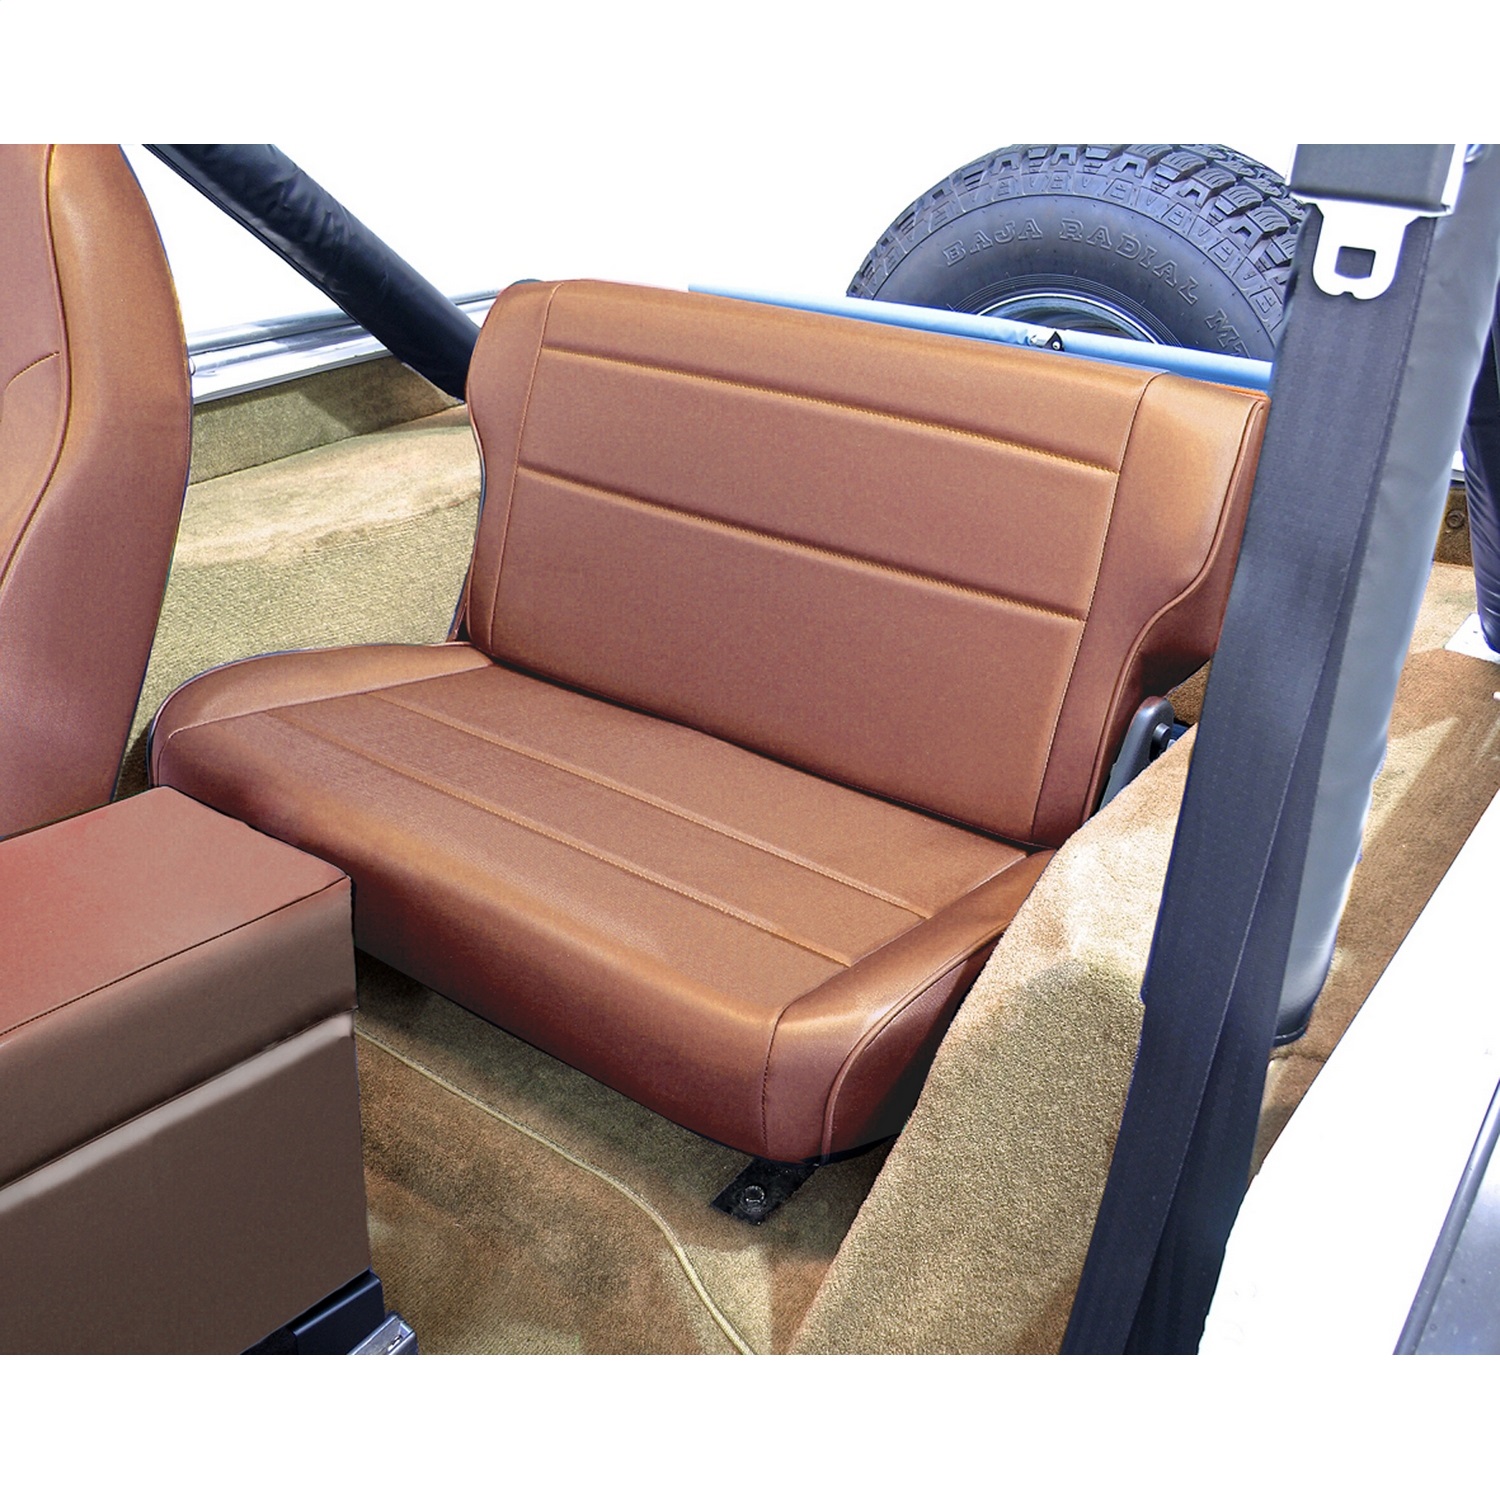 Rugged Ridge 13462.04 Fold And Tumble Rear Seat Fits 86-95 CJ7 Wrangler (YJ)